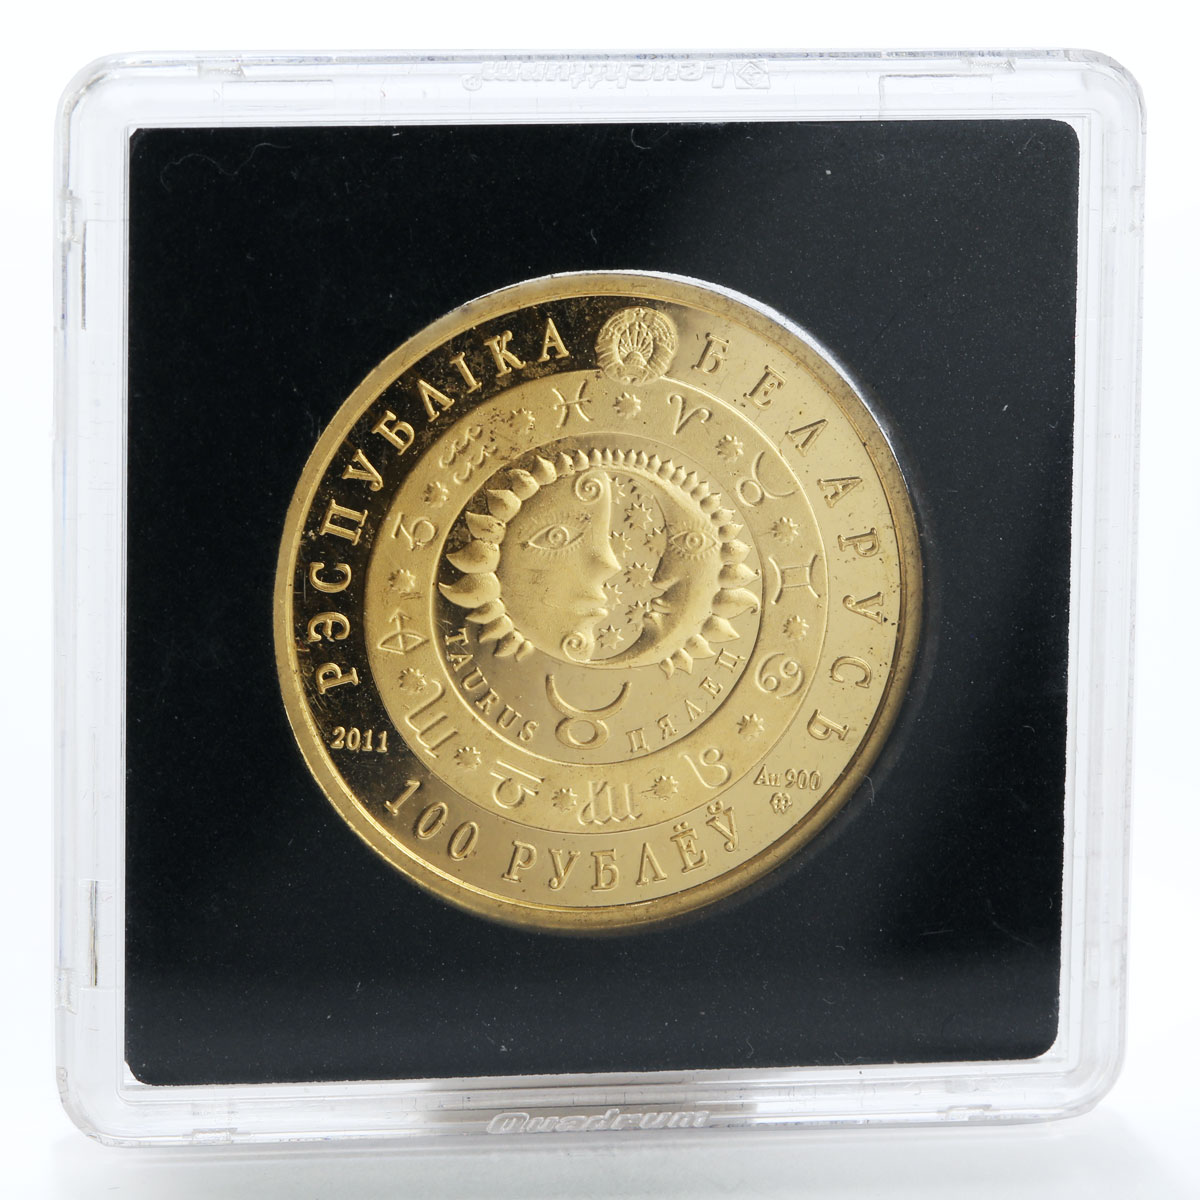 Belarus 100 rubles Zodiac Taurus Bull Sun and Moon gold coin 2011